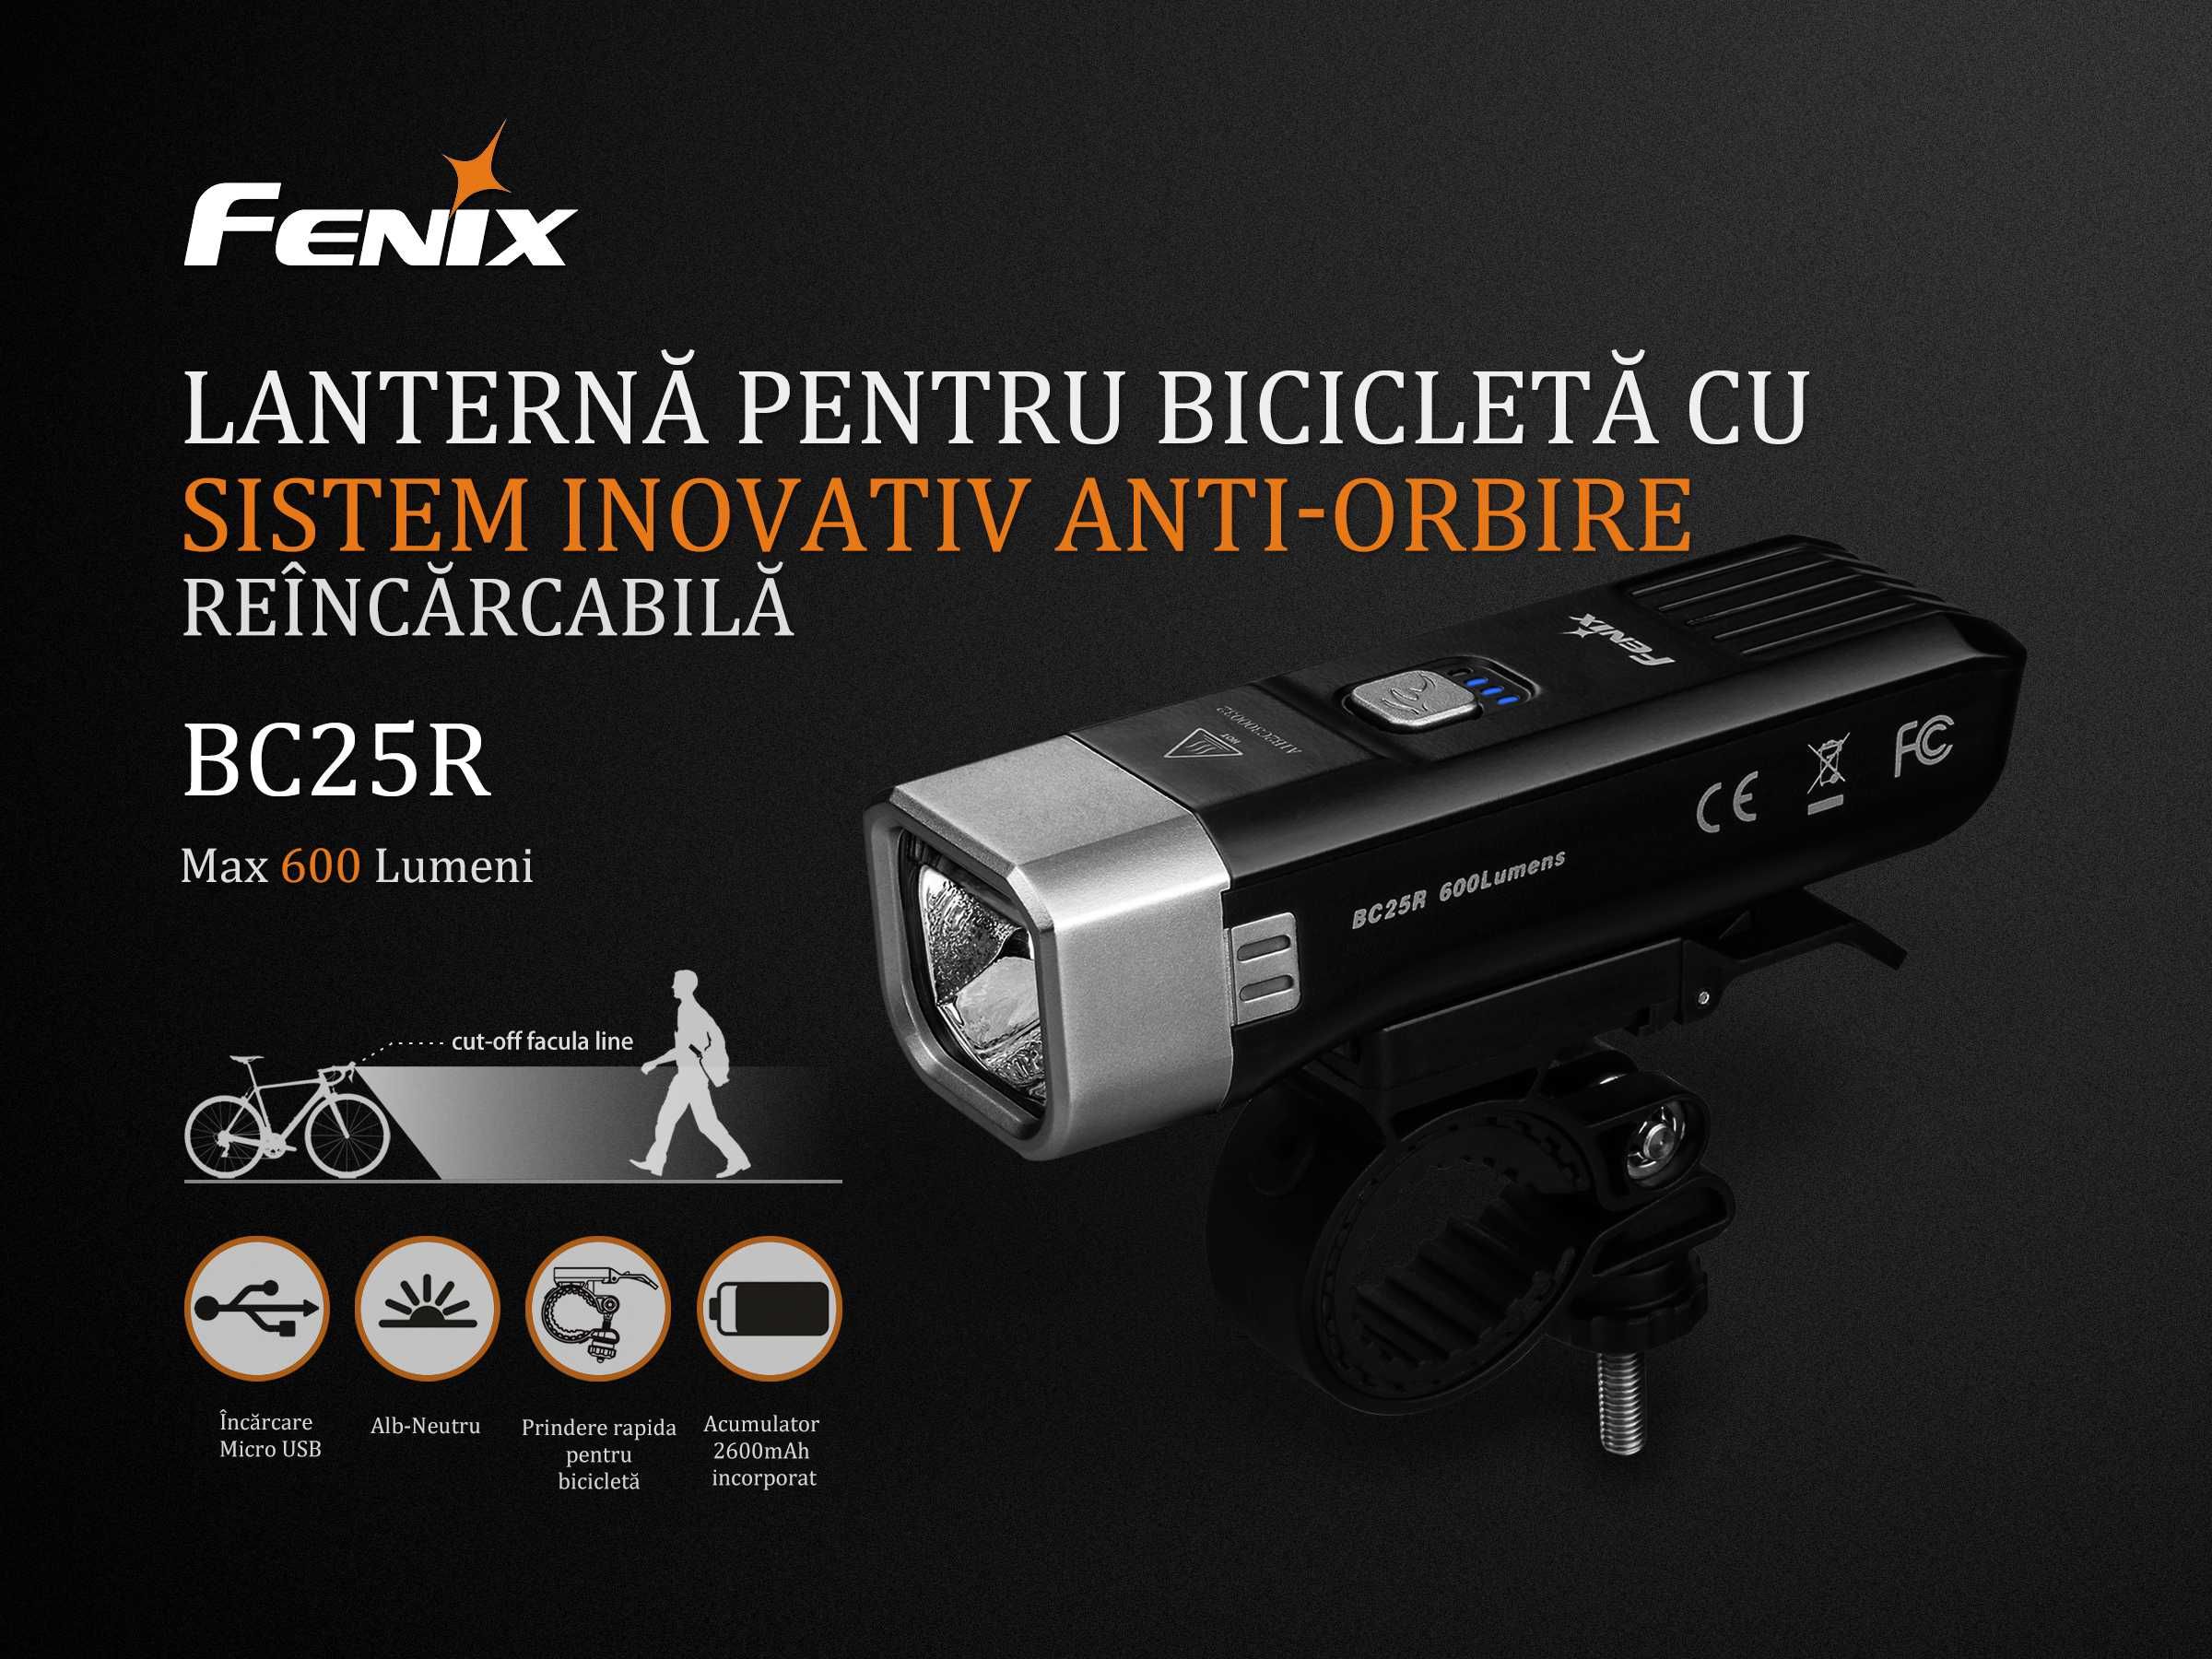 Lanterna bicicleta reincarcabila Fenix BC25R - 600 lumeni